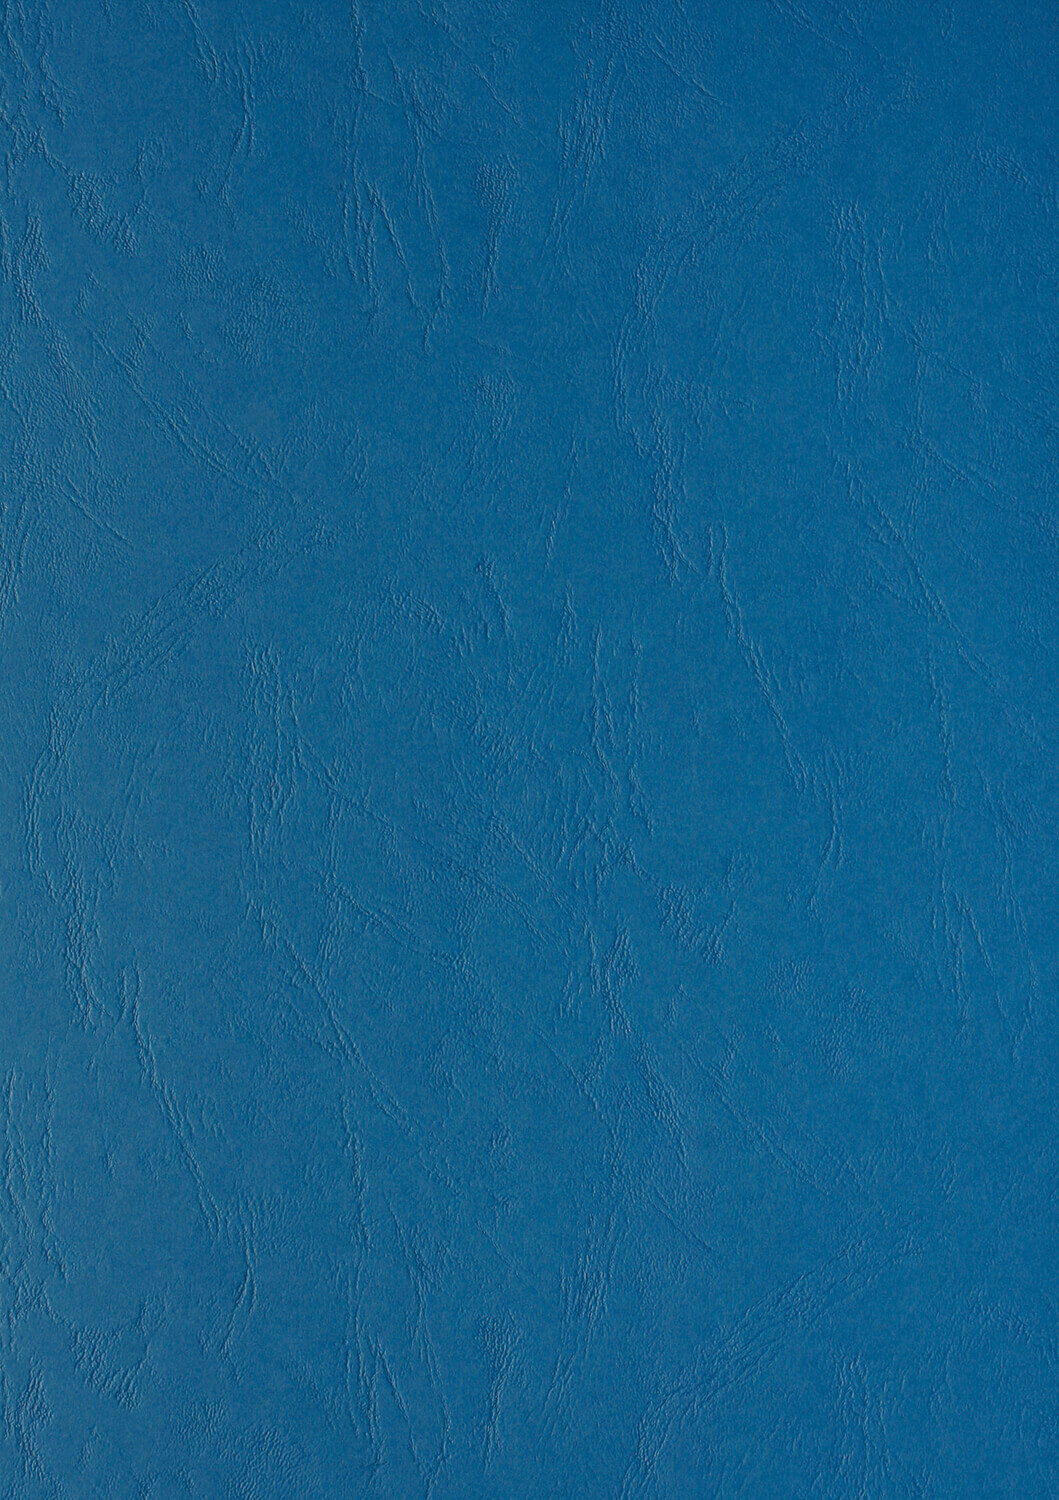 Clairefontaine 240g A4 ledergenarbt Text & Coverblau 2768 | Bestnr. UMBR240-2768